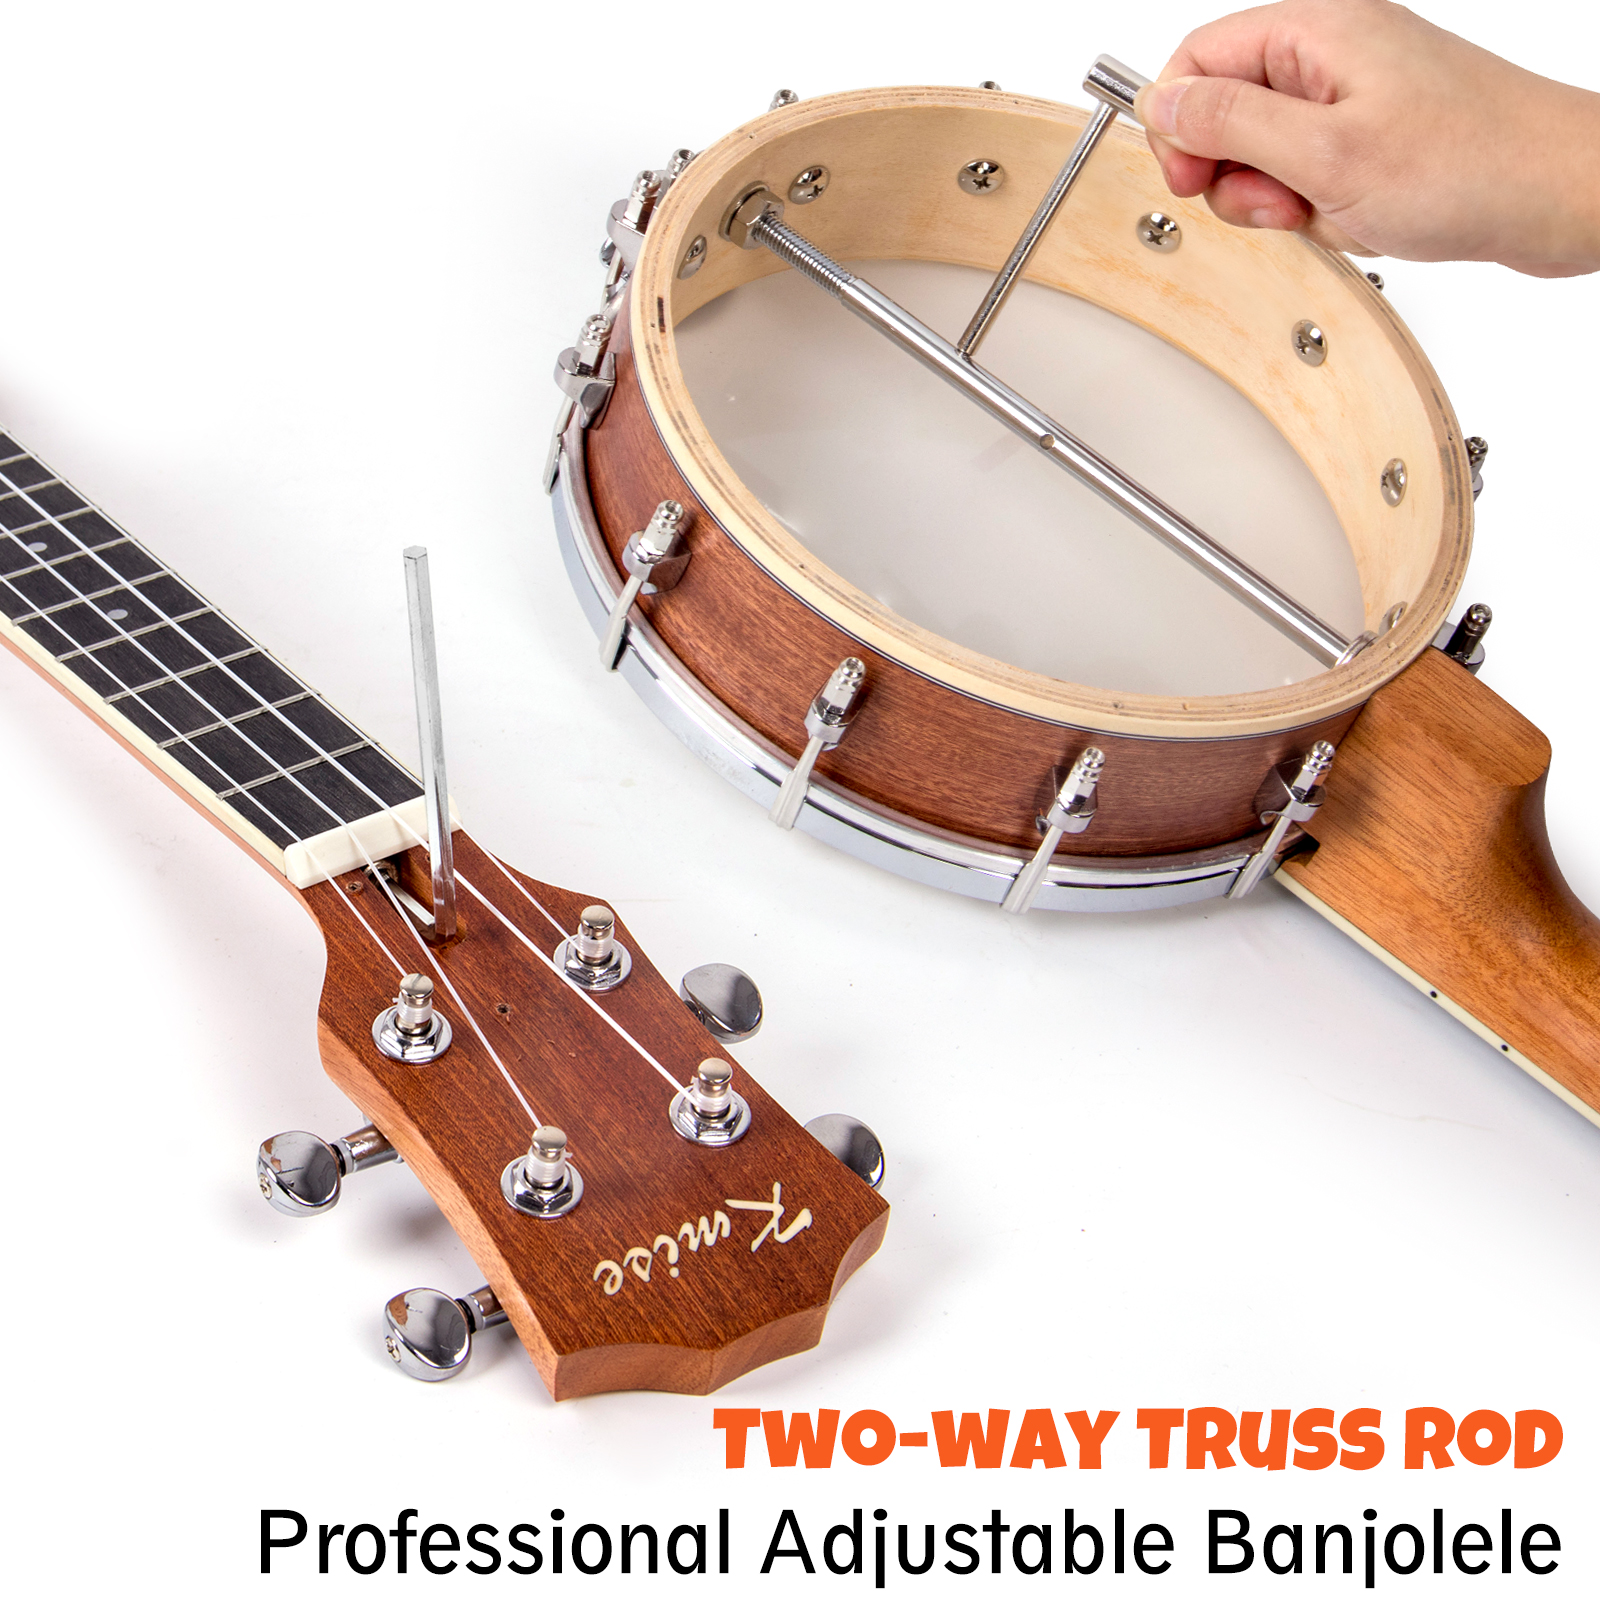 Kmise Professional Tenor Banjo Ukulele Inch Banjolele with Bag Strap Tuner Picks_Banjolele_Banjo_kmise -